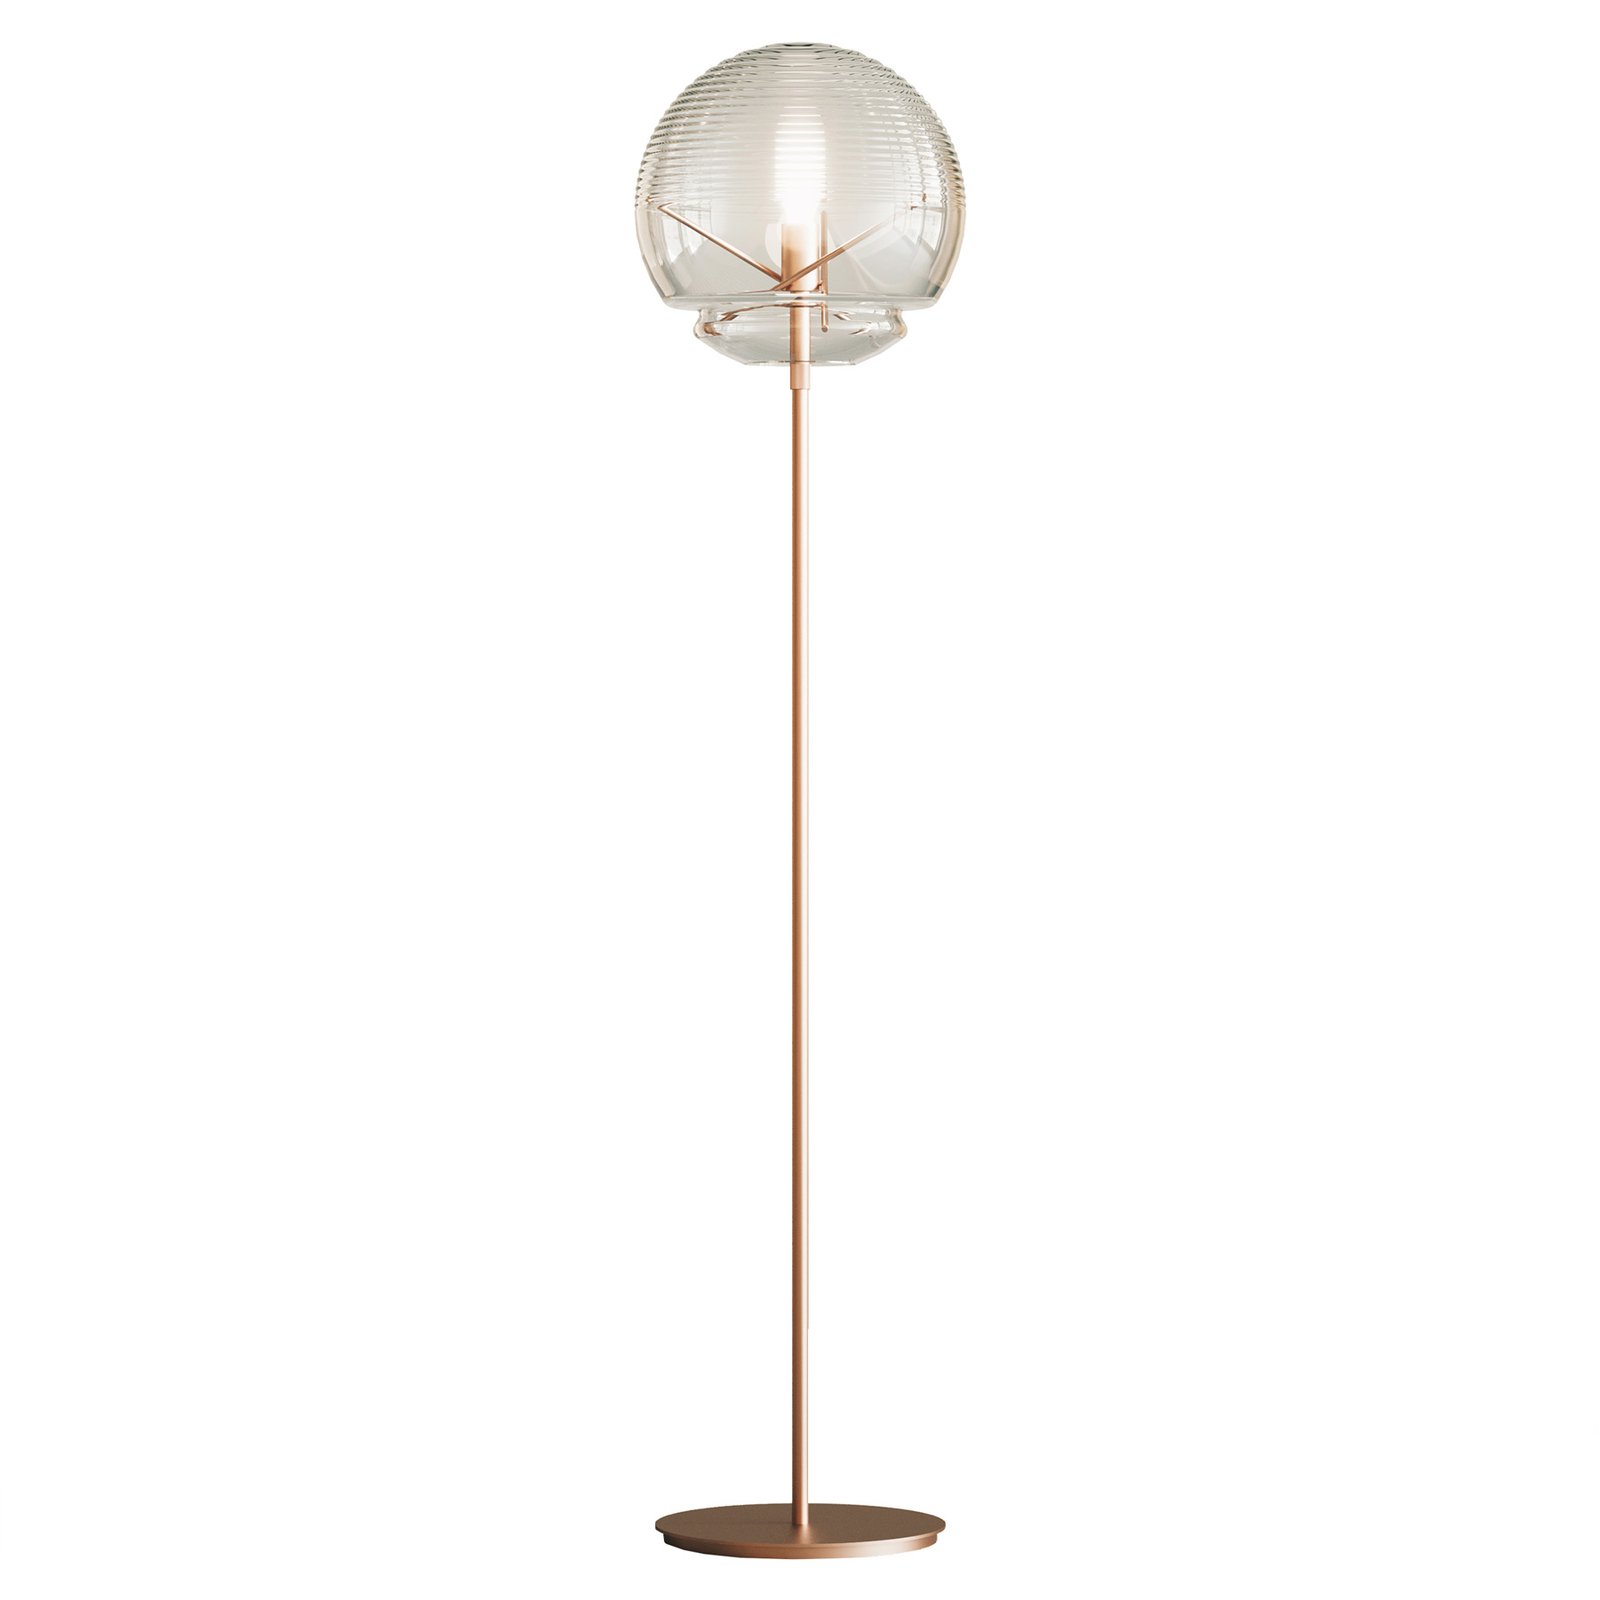 Artemide Vitruvio floor lamp dimmable, brass